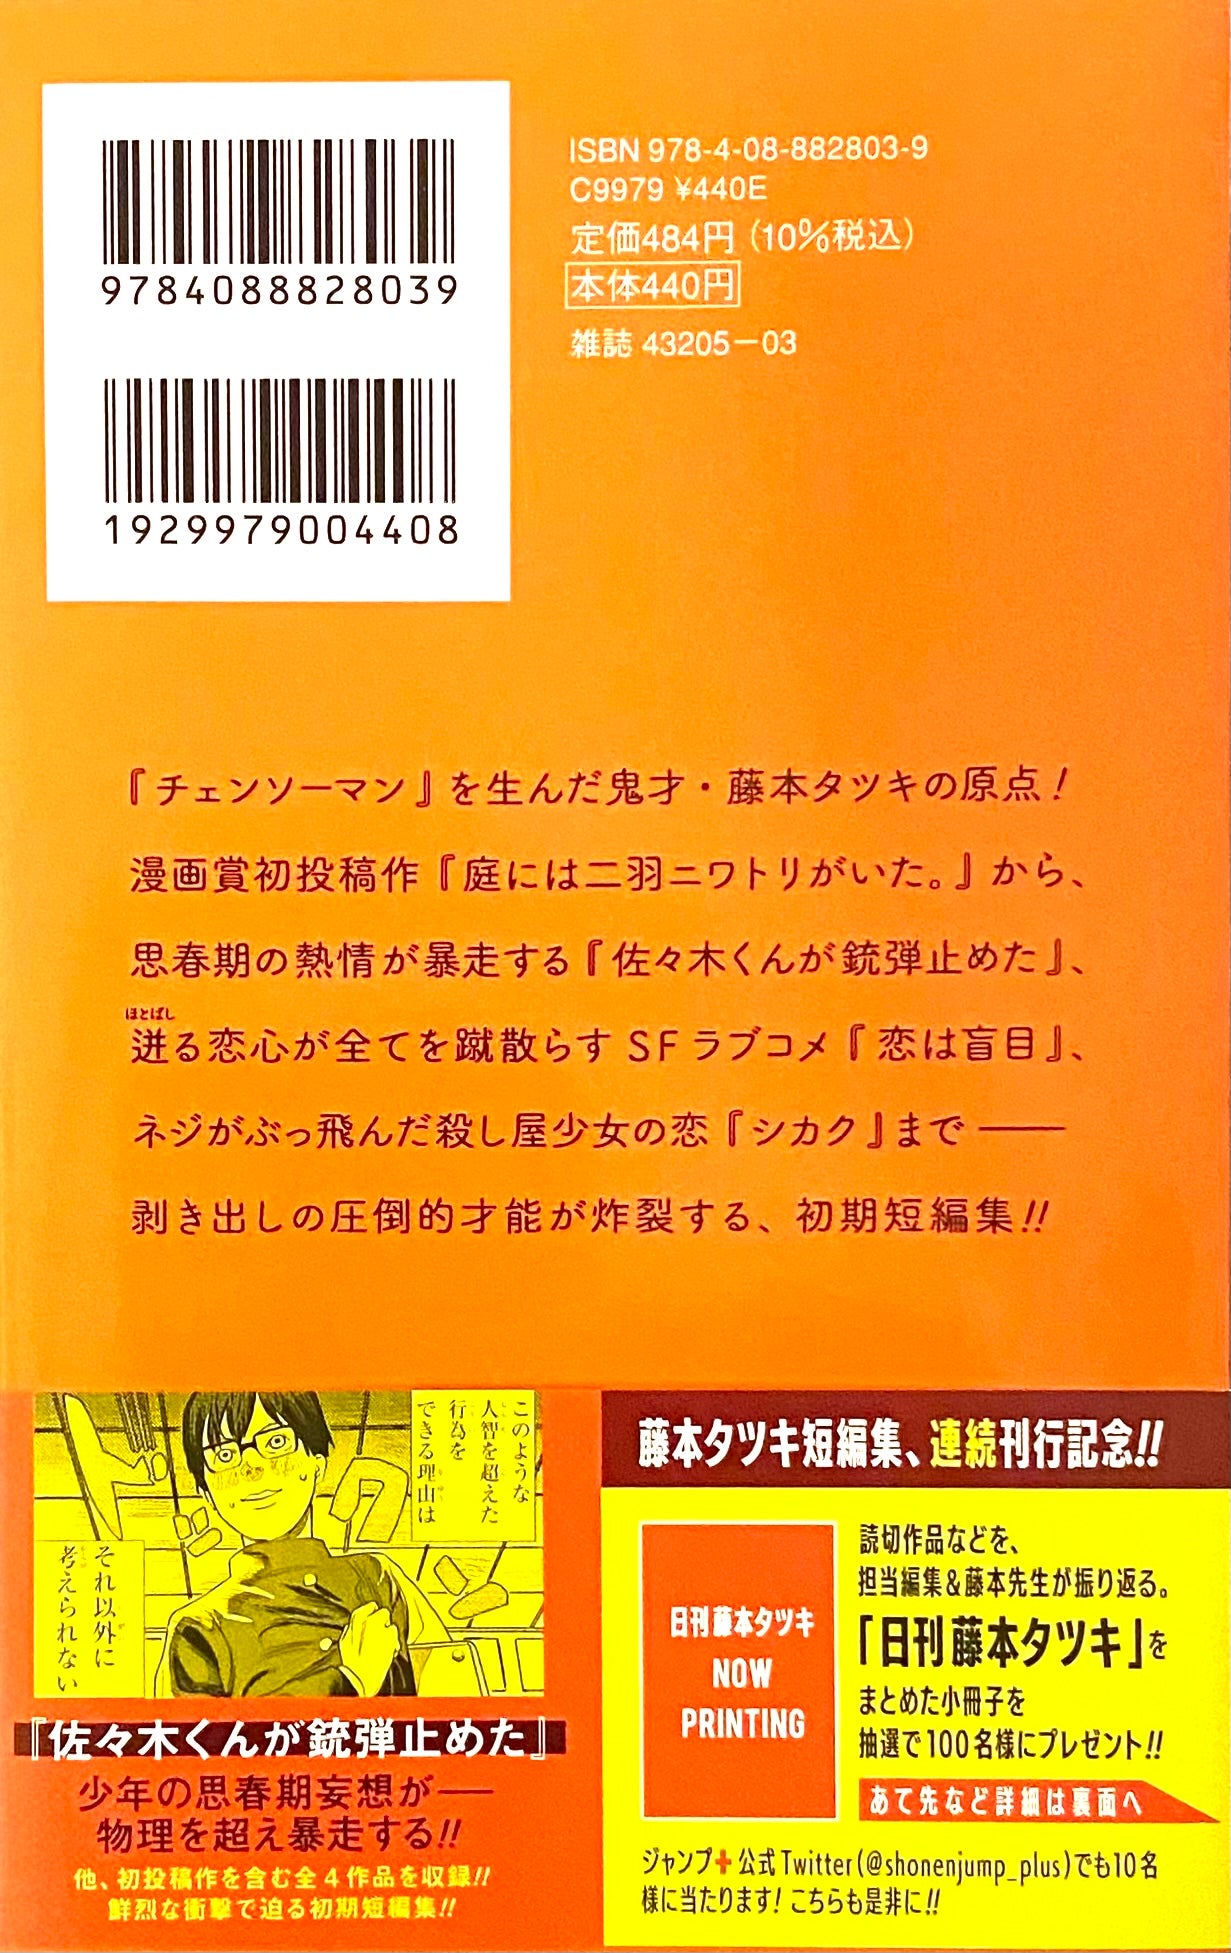 Tatsuki Fujimoto Before Chainsaw Man 17-21-Official Japanese Edition